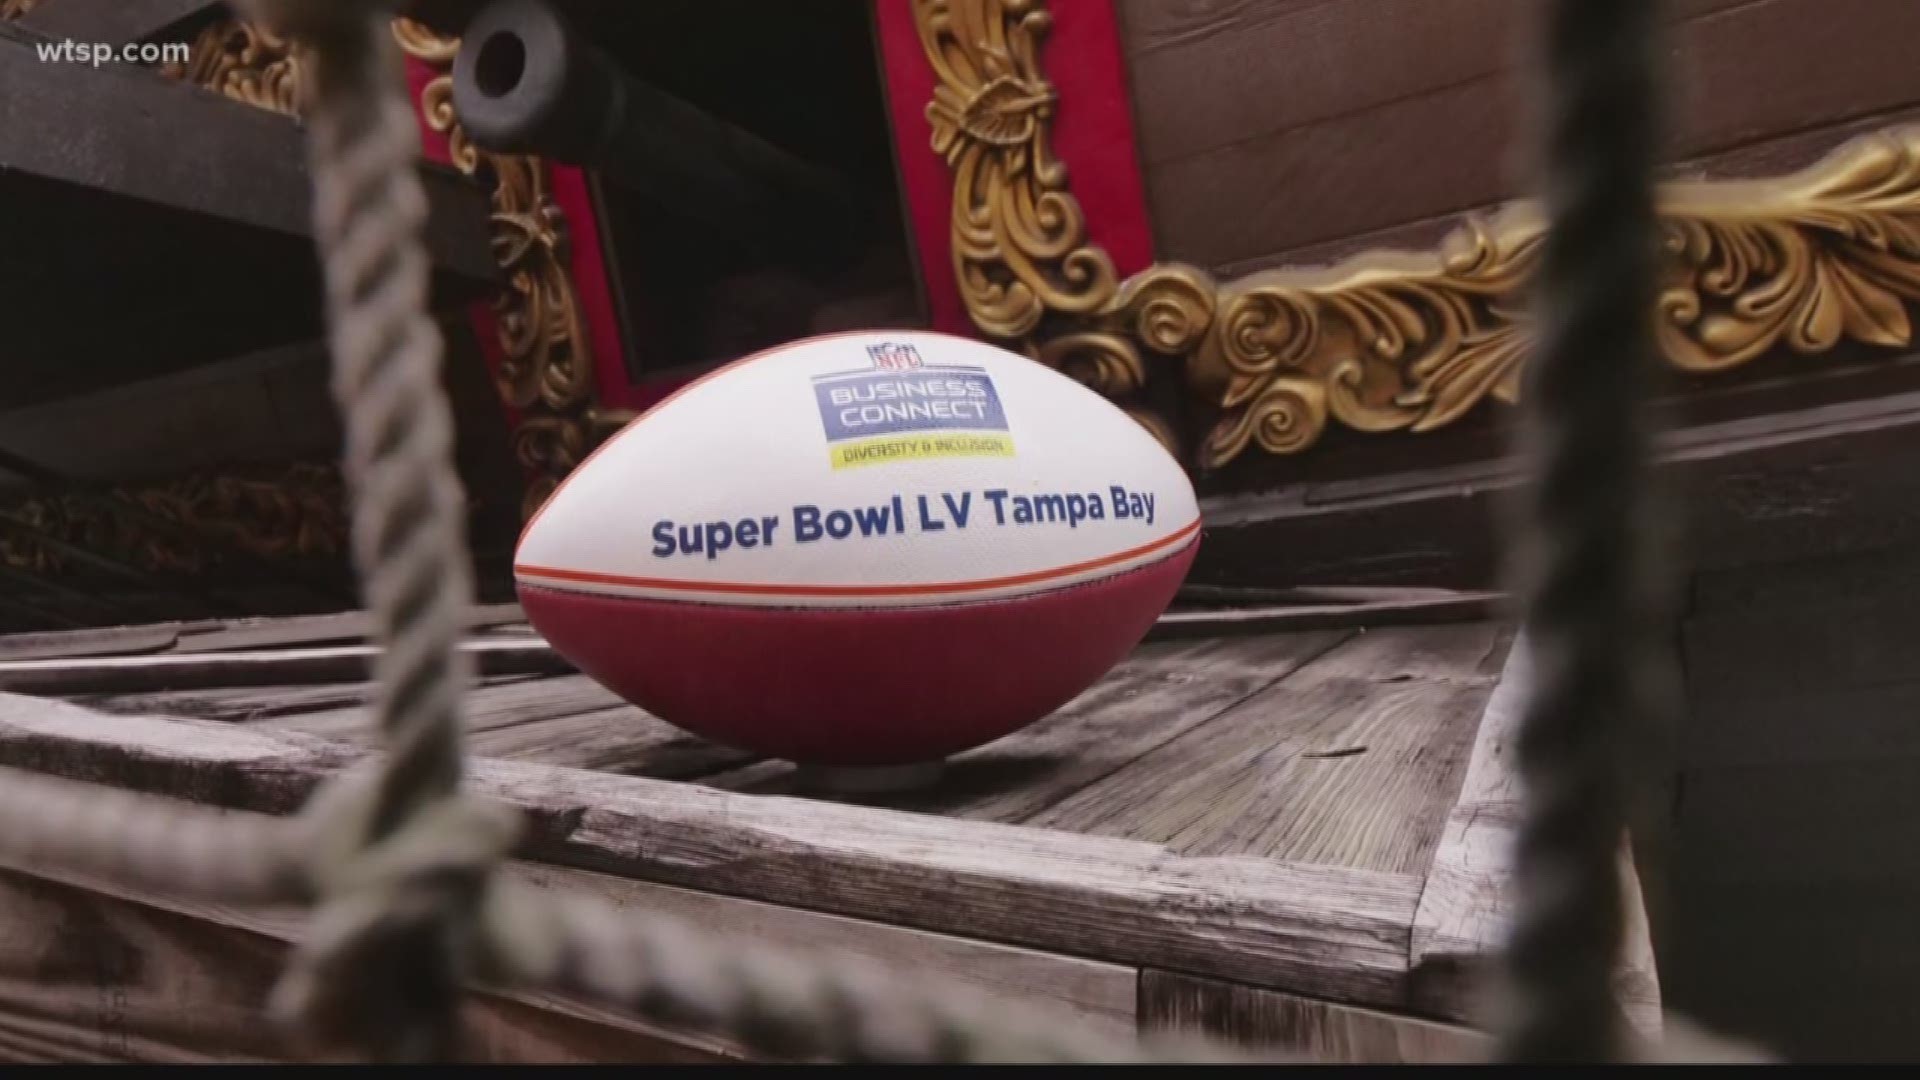 Vendor Opportunities through Super Bowl LVI Business Connect